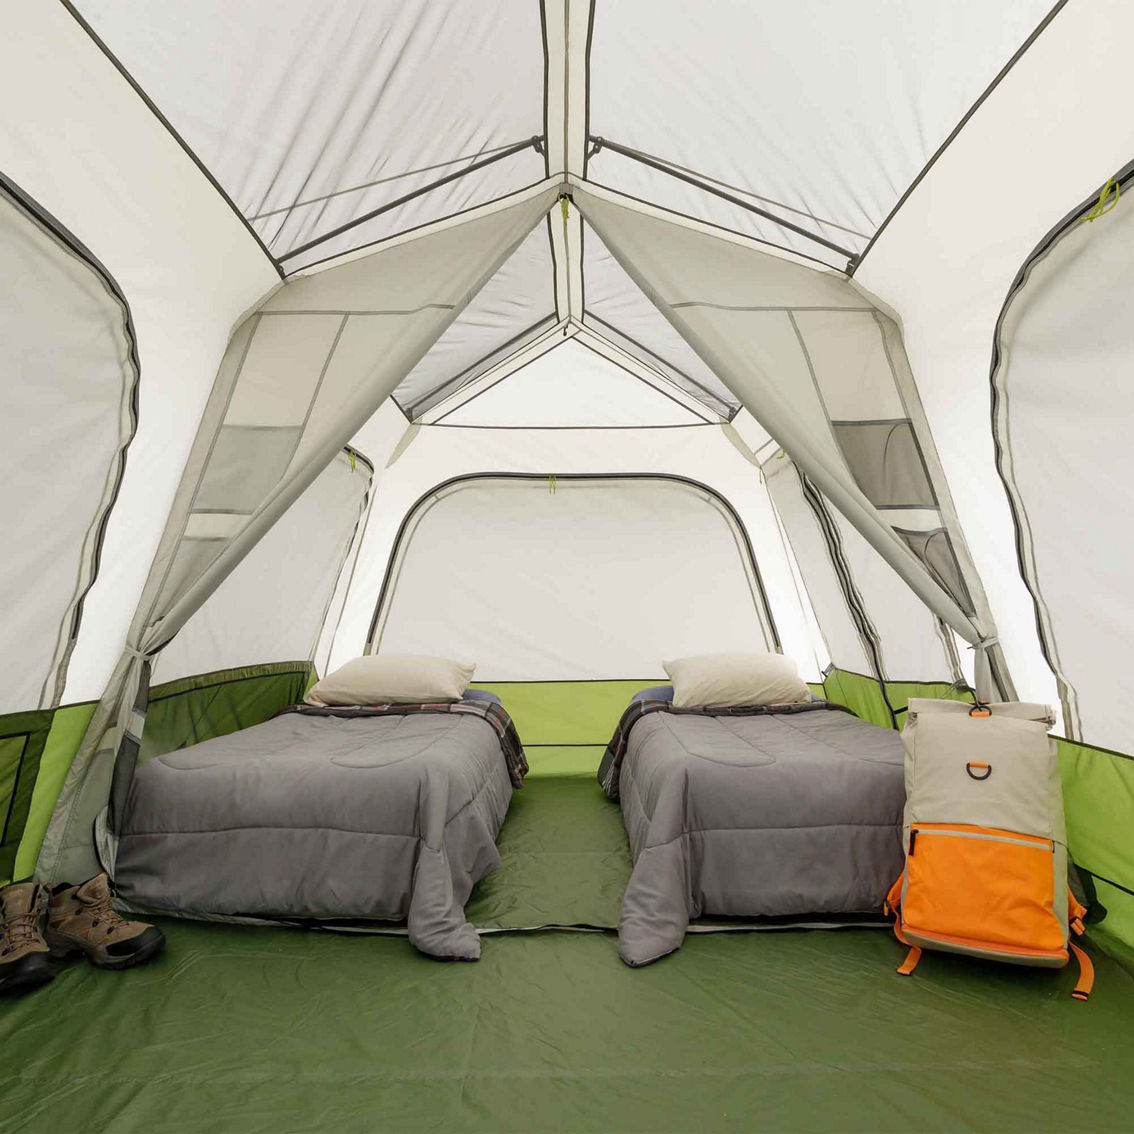 Core Equipment 8 Person Cabin Tent - Image 5 of 6